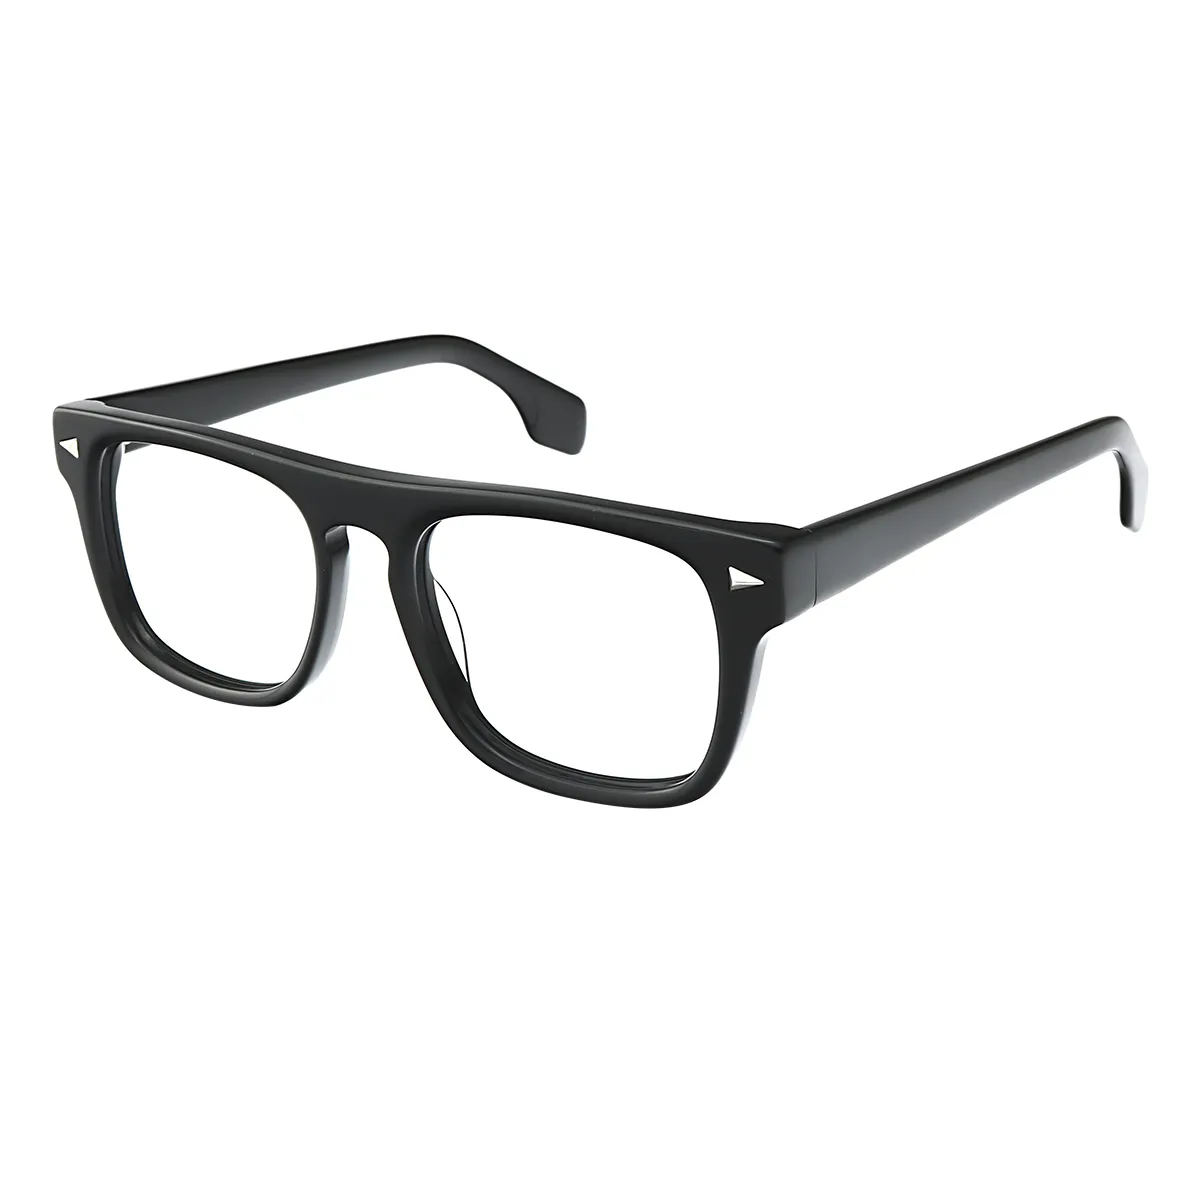 Carlyle - Square Black Glasses for Men & Women